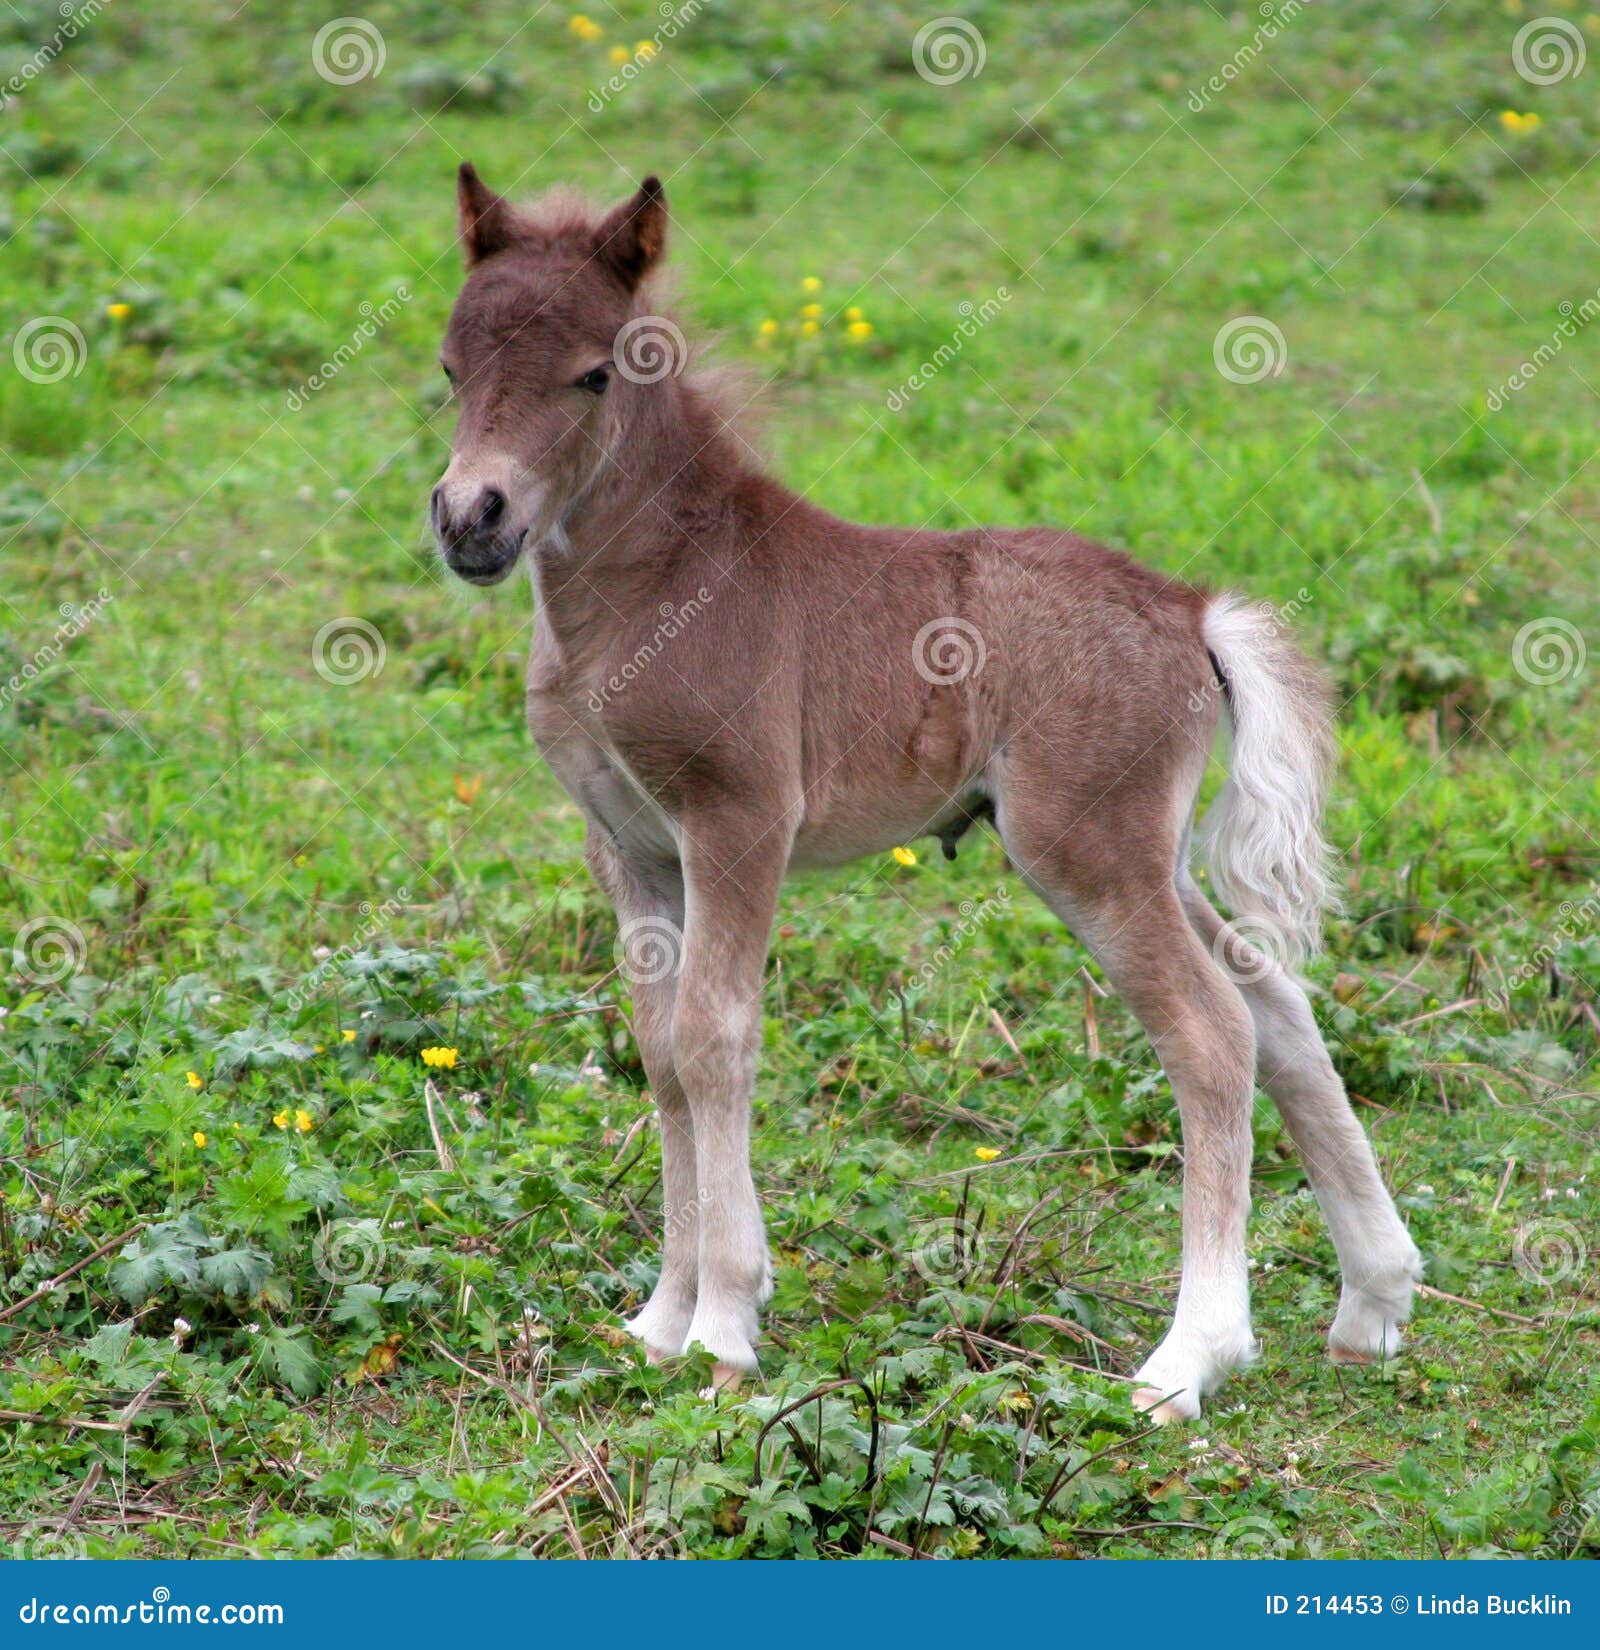 Young Colt stock image. Image of adorable, colt, juvenile - 214453